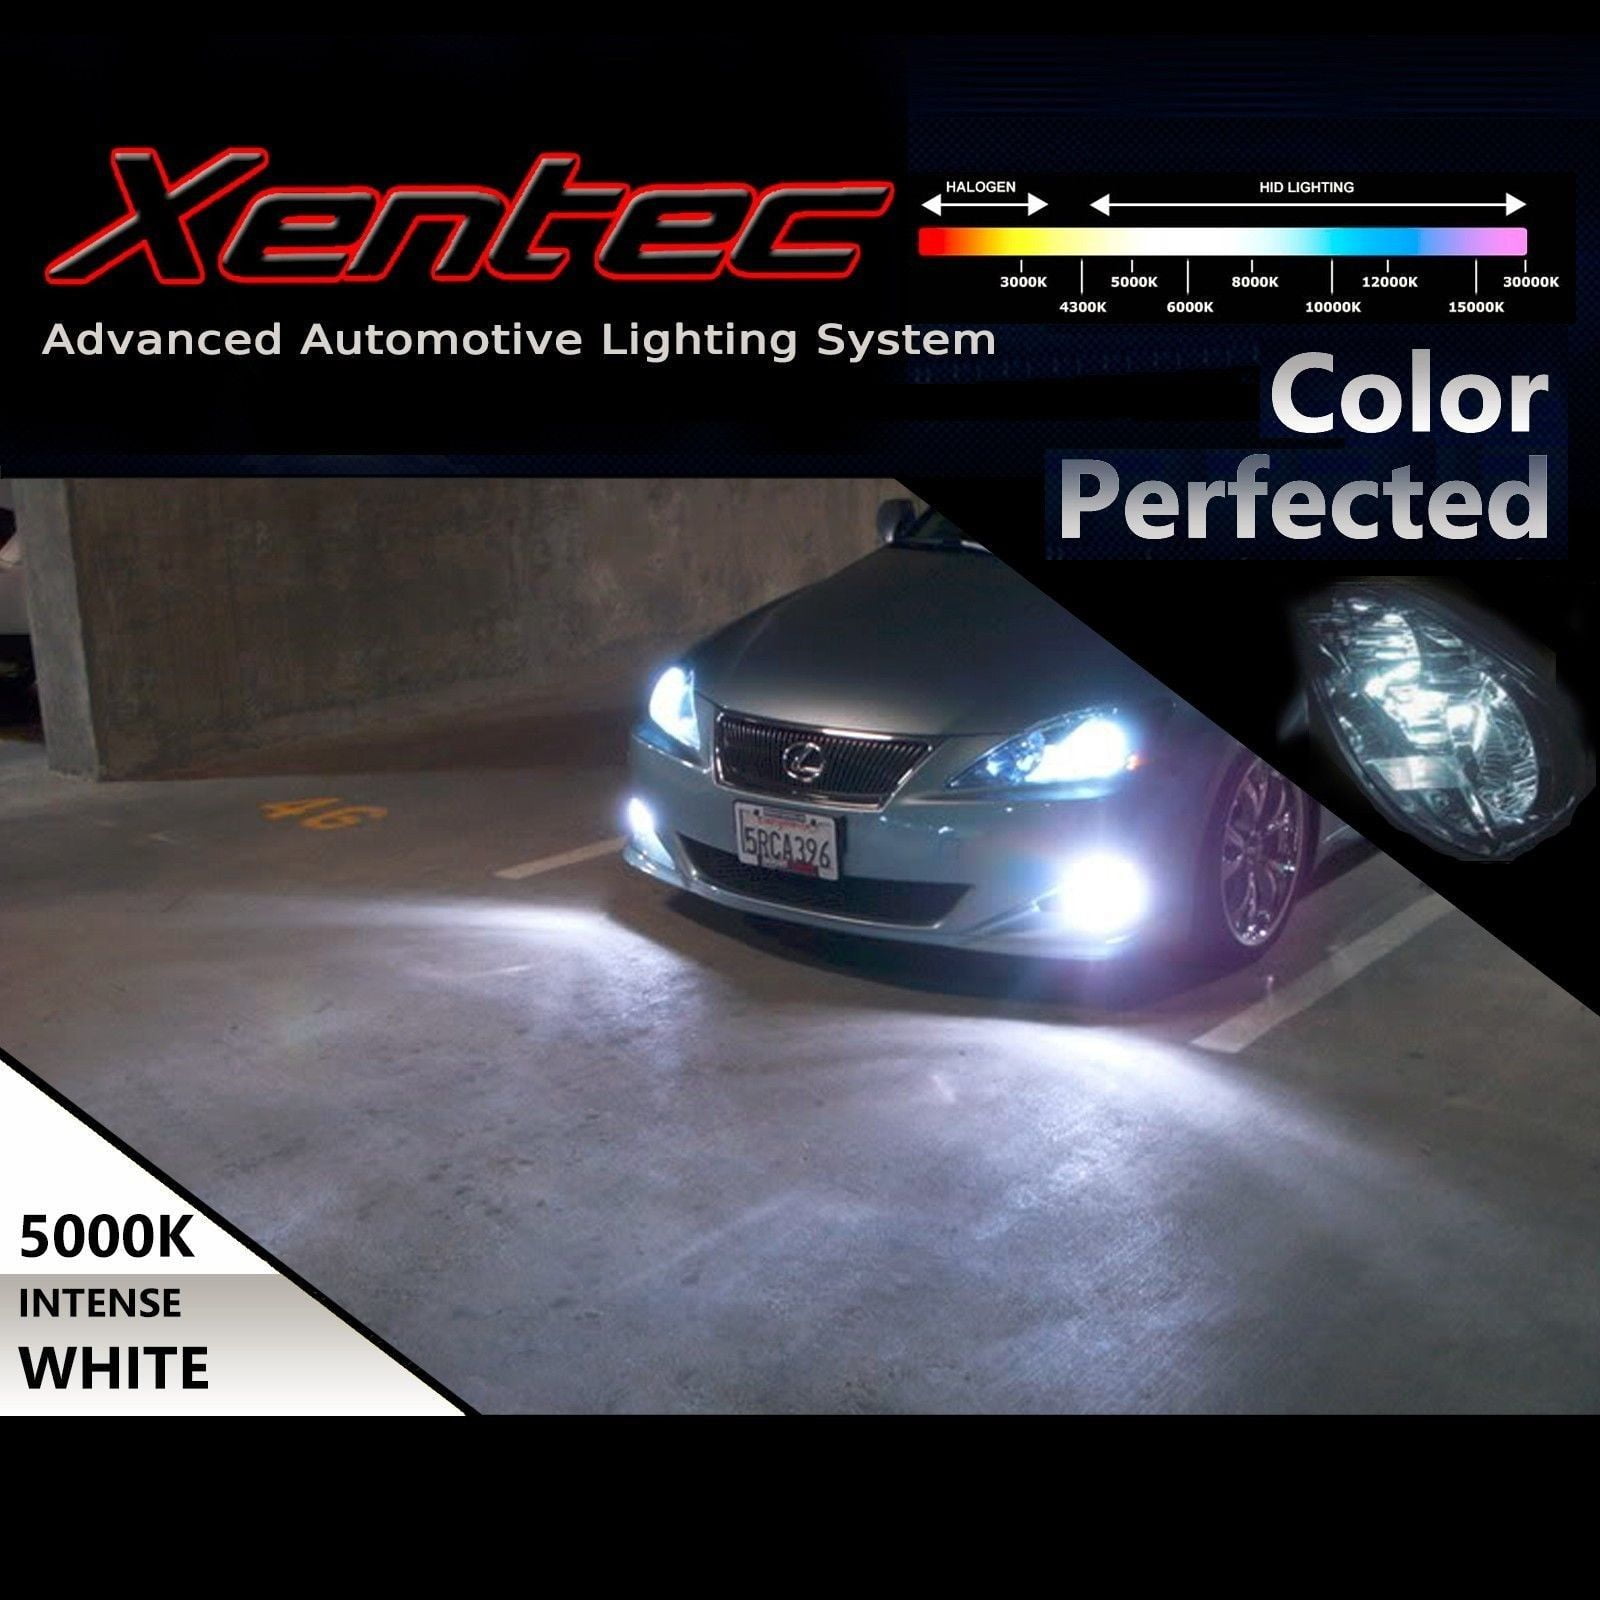 6000K Diamond White HID Xenon Headlight Bulb for Lexus IS300 2001-2005 Low Beam